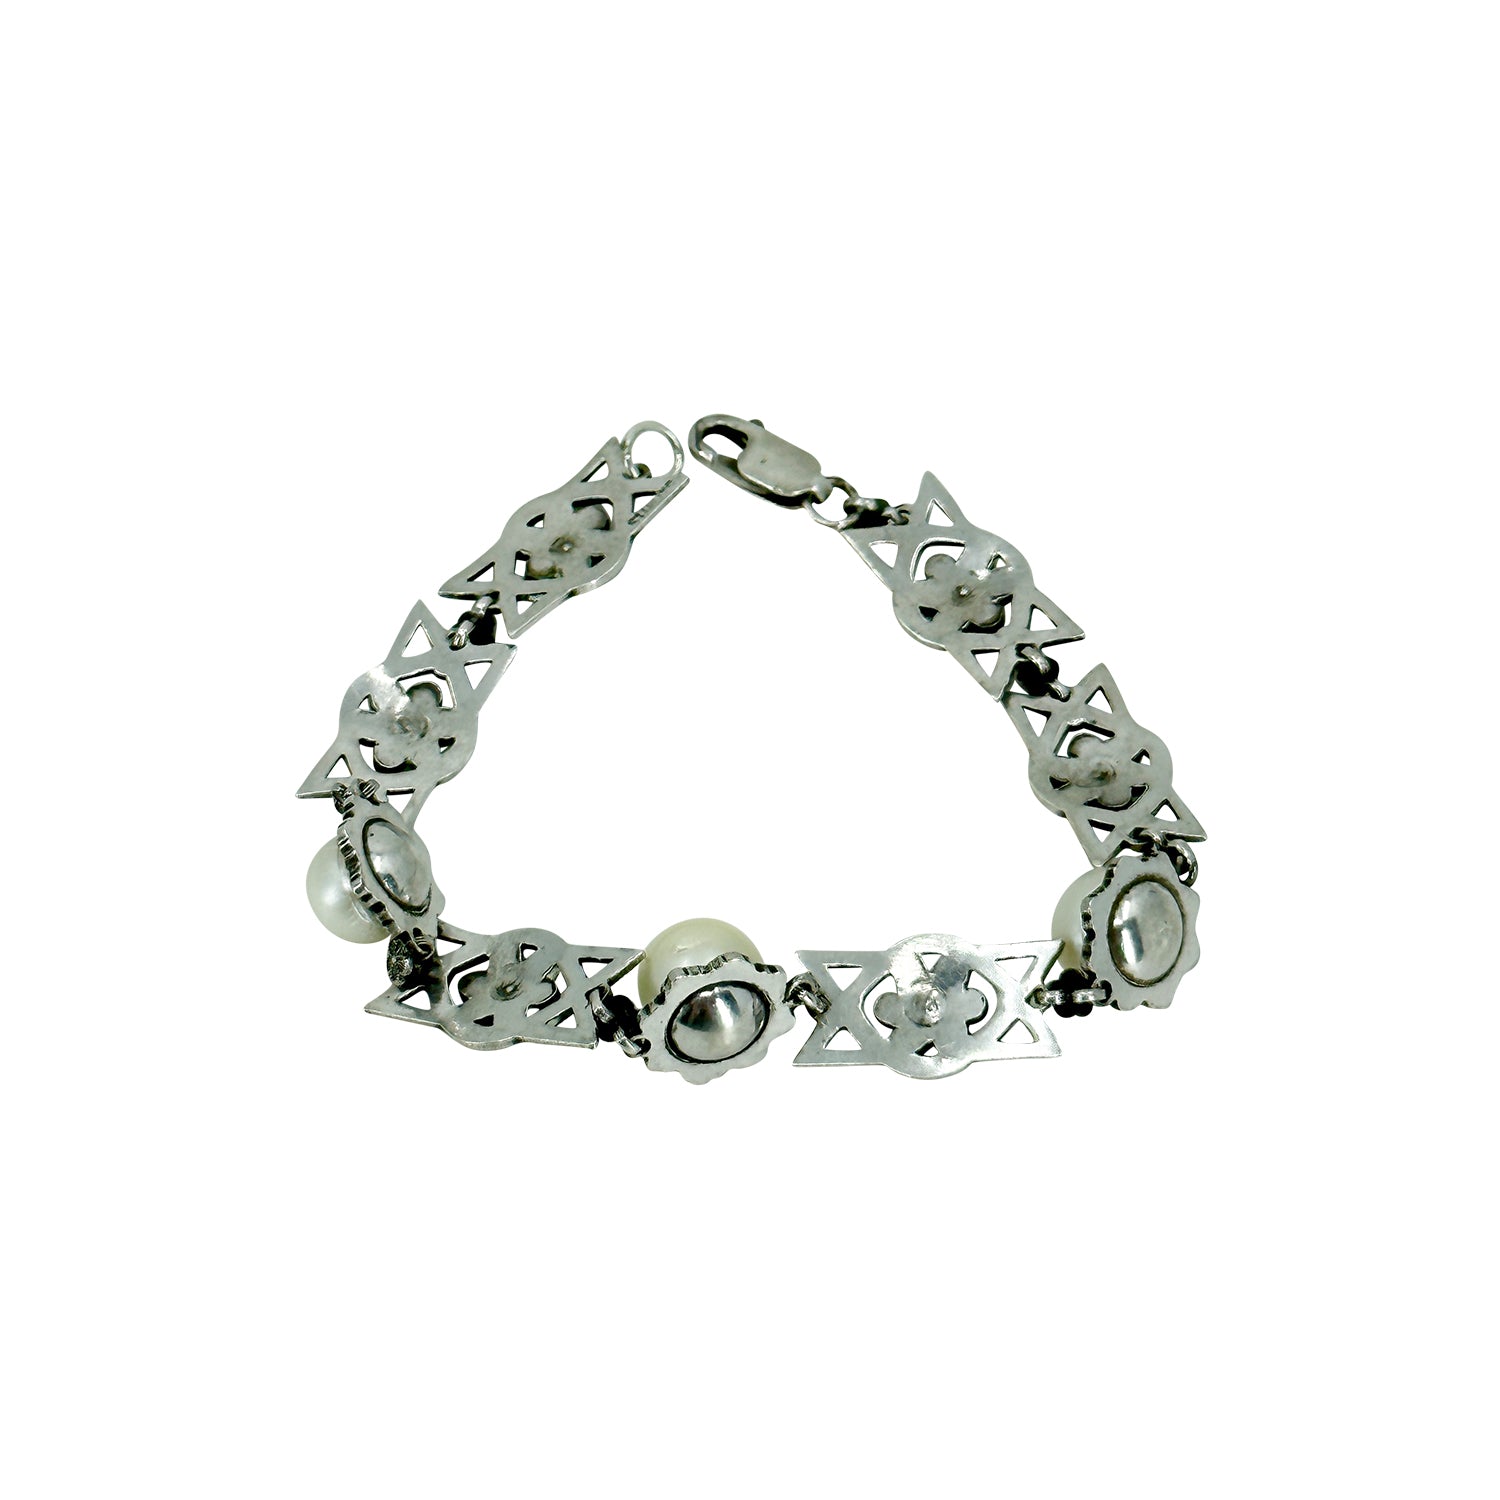 Art Deco Geometric Marcasite Japanese Saltwater Akoya Cultured Pearl Vintage Bracelet- Sterling Silver